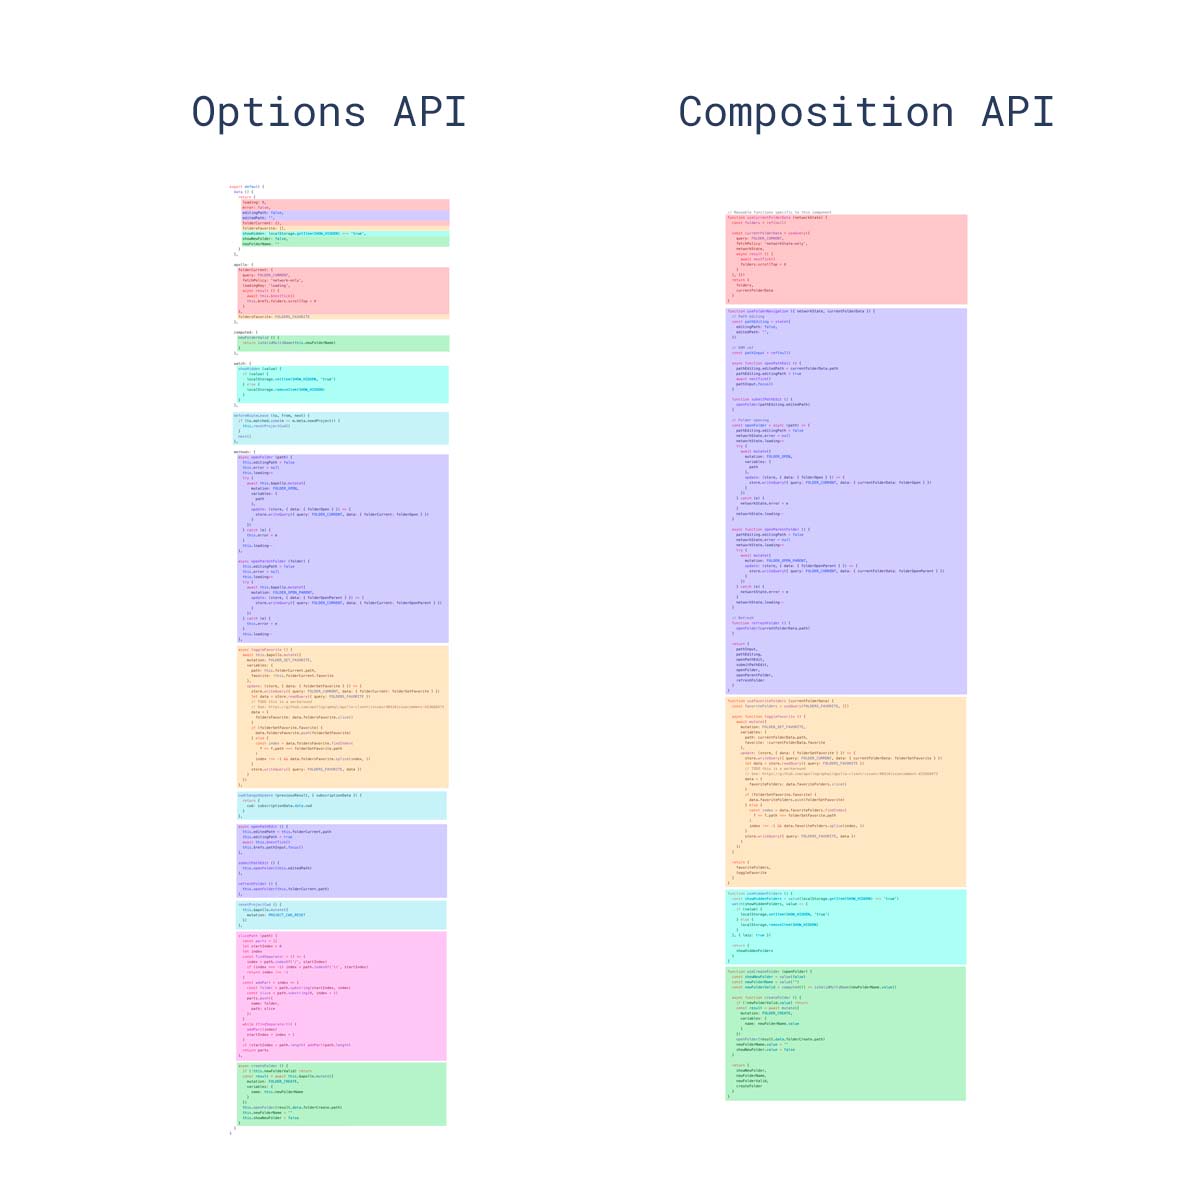 https://vuejs.org/guide/extras/composition-api-faq.html#more-flexible-code-organization